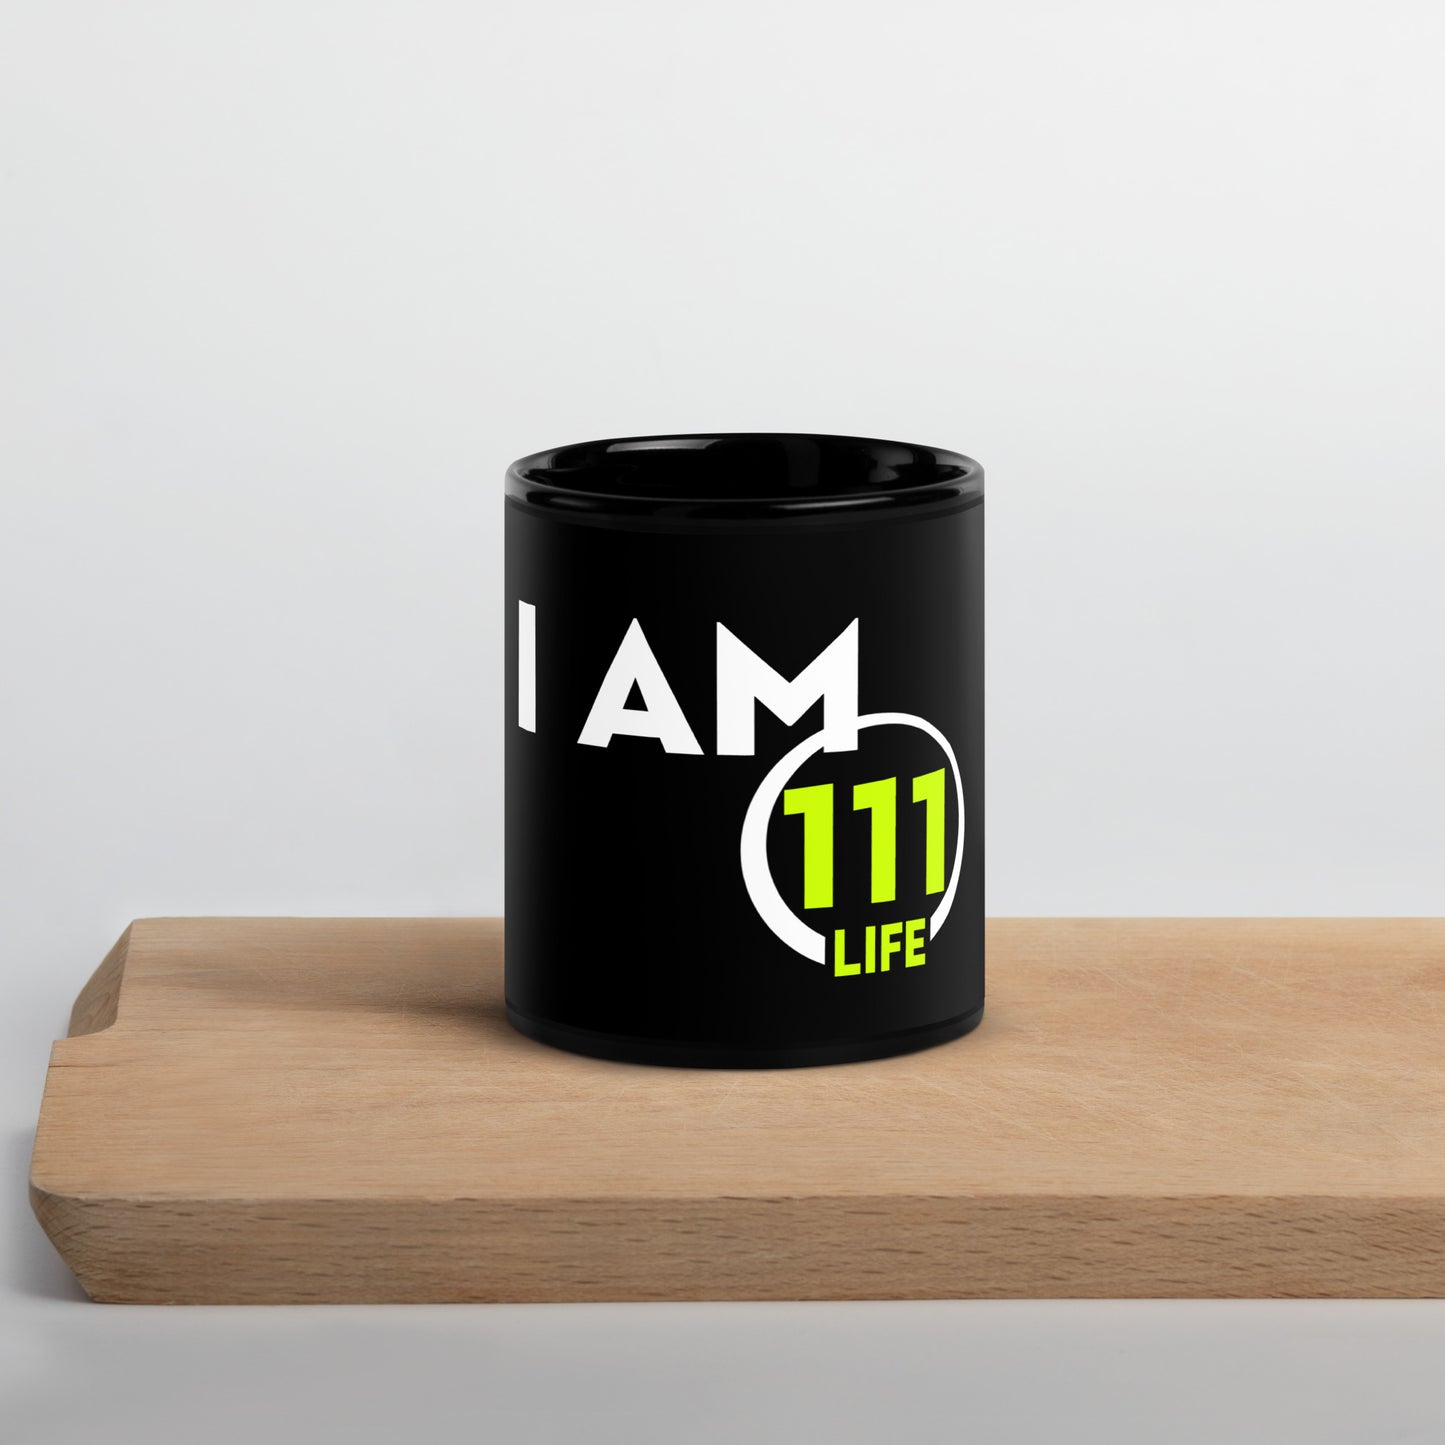 111 LIFE - I AM - Black Glossy Mug